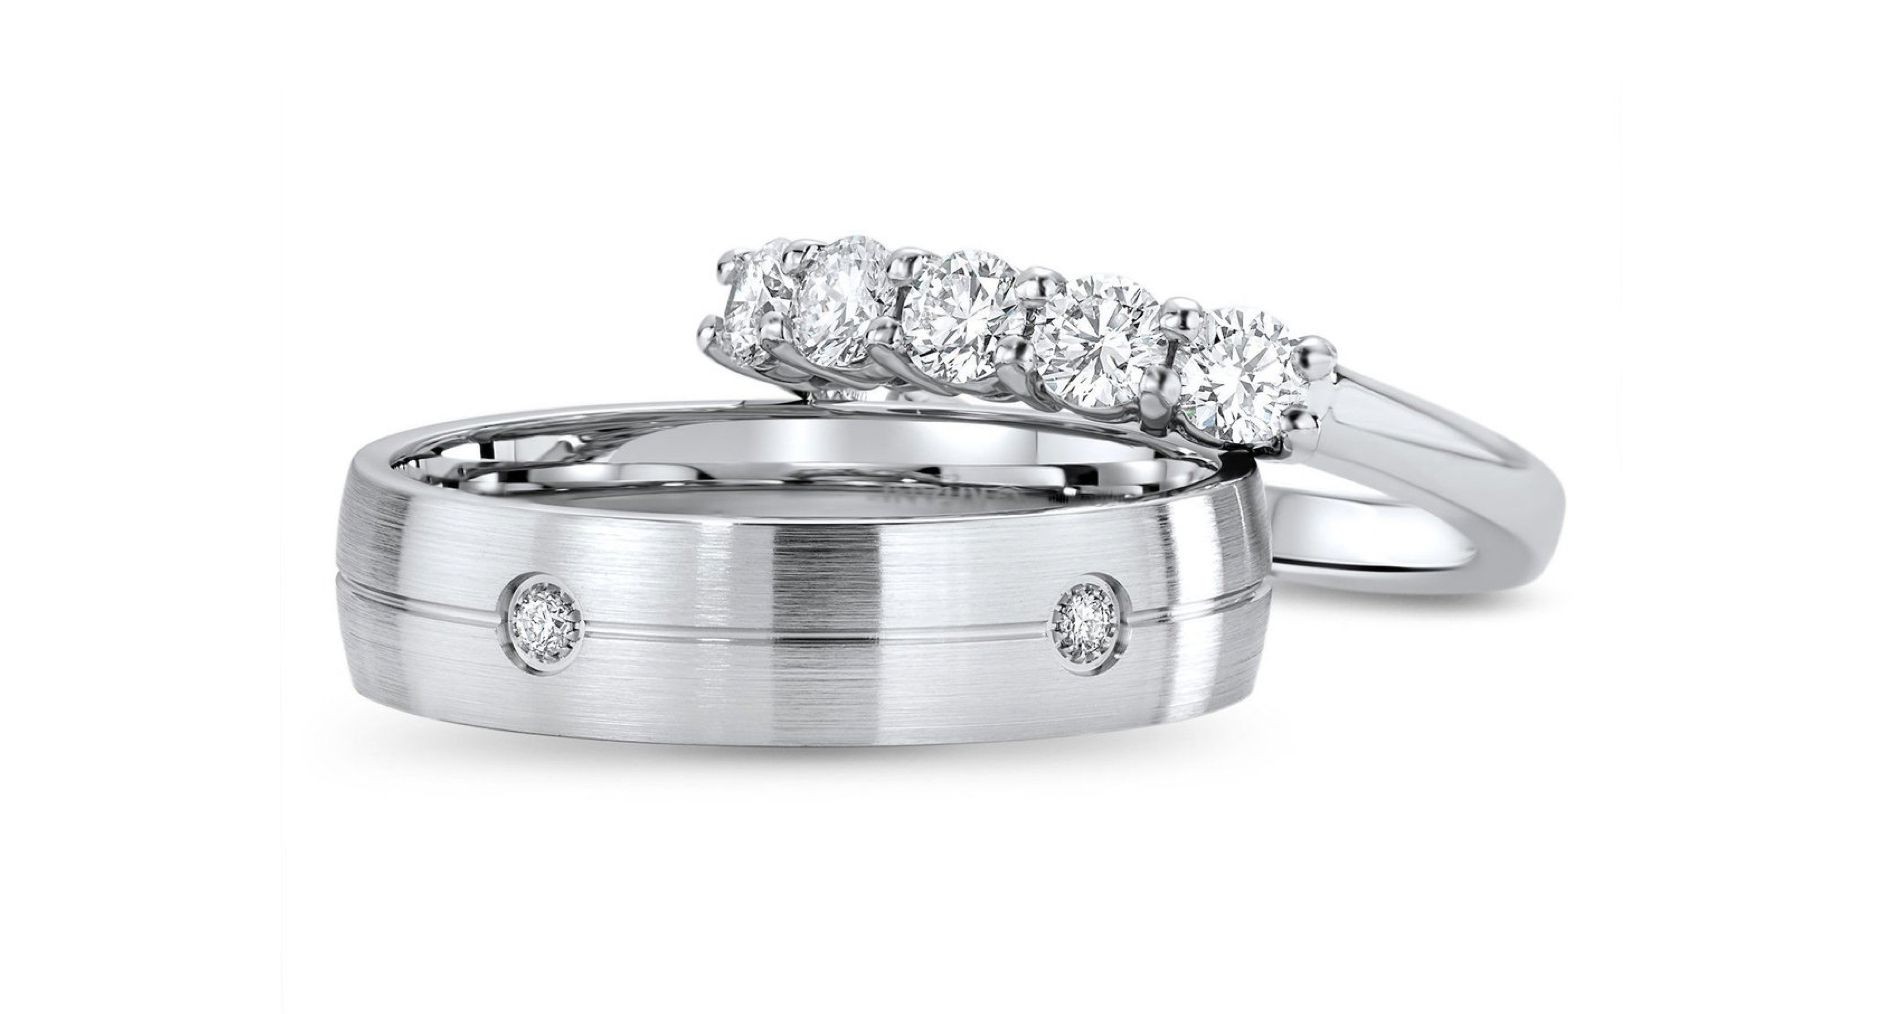 Buy Diamond Men's Ring, 10K White Gold Ring, Diamond Cluster Ring, Gold  Rings For Men, Wedding Ring For Him 2.00 ctw at ShopLC.